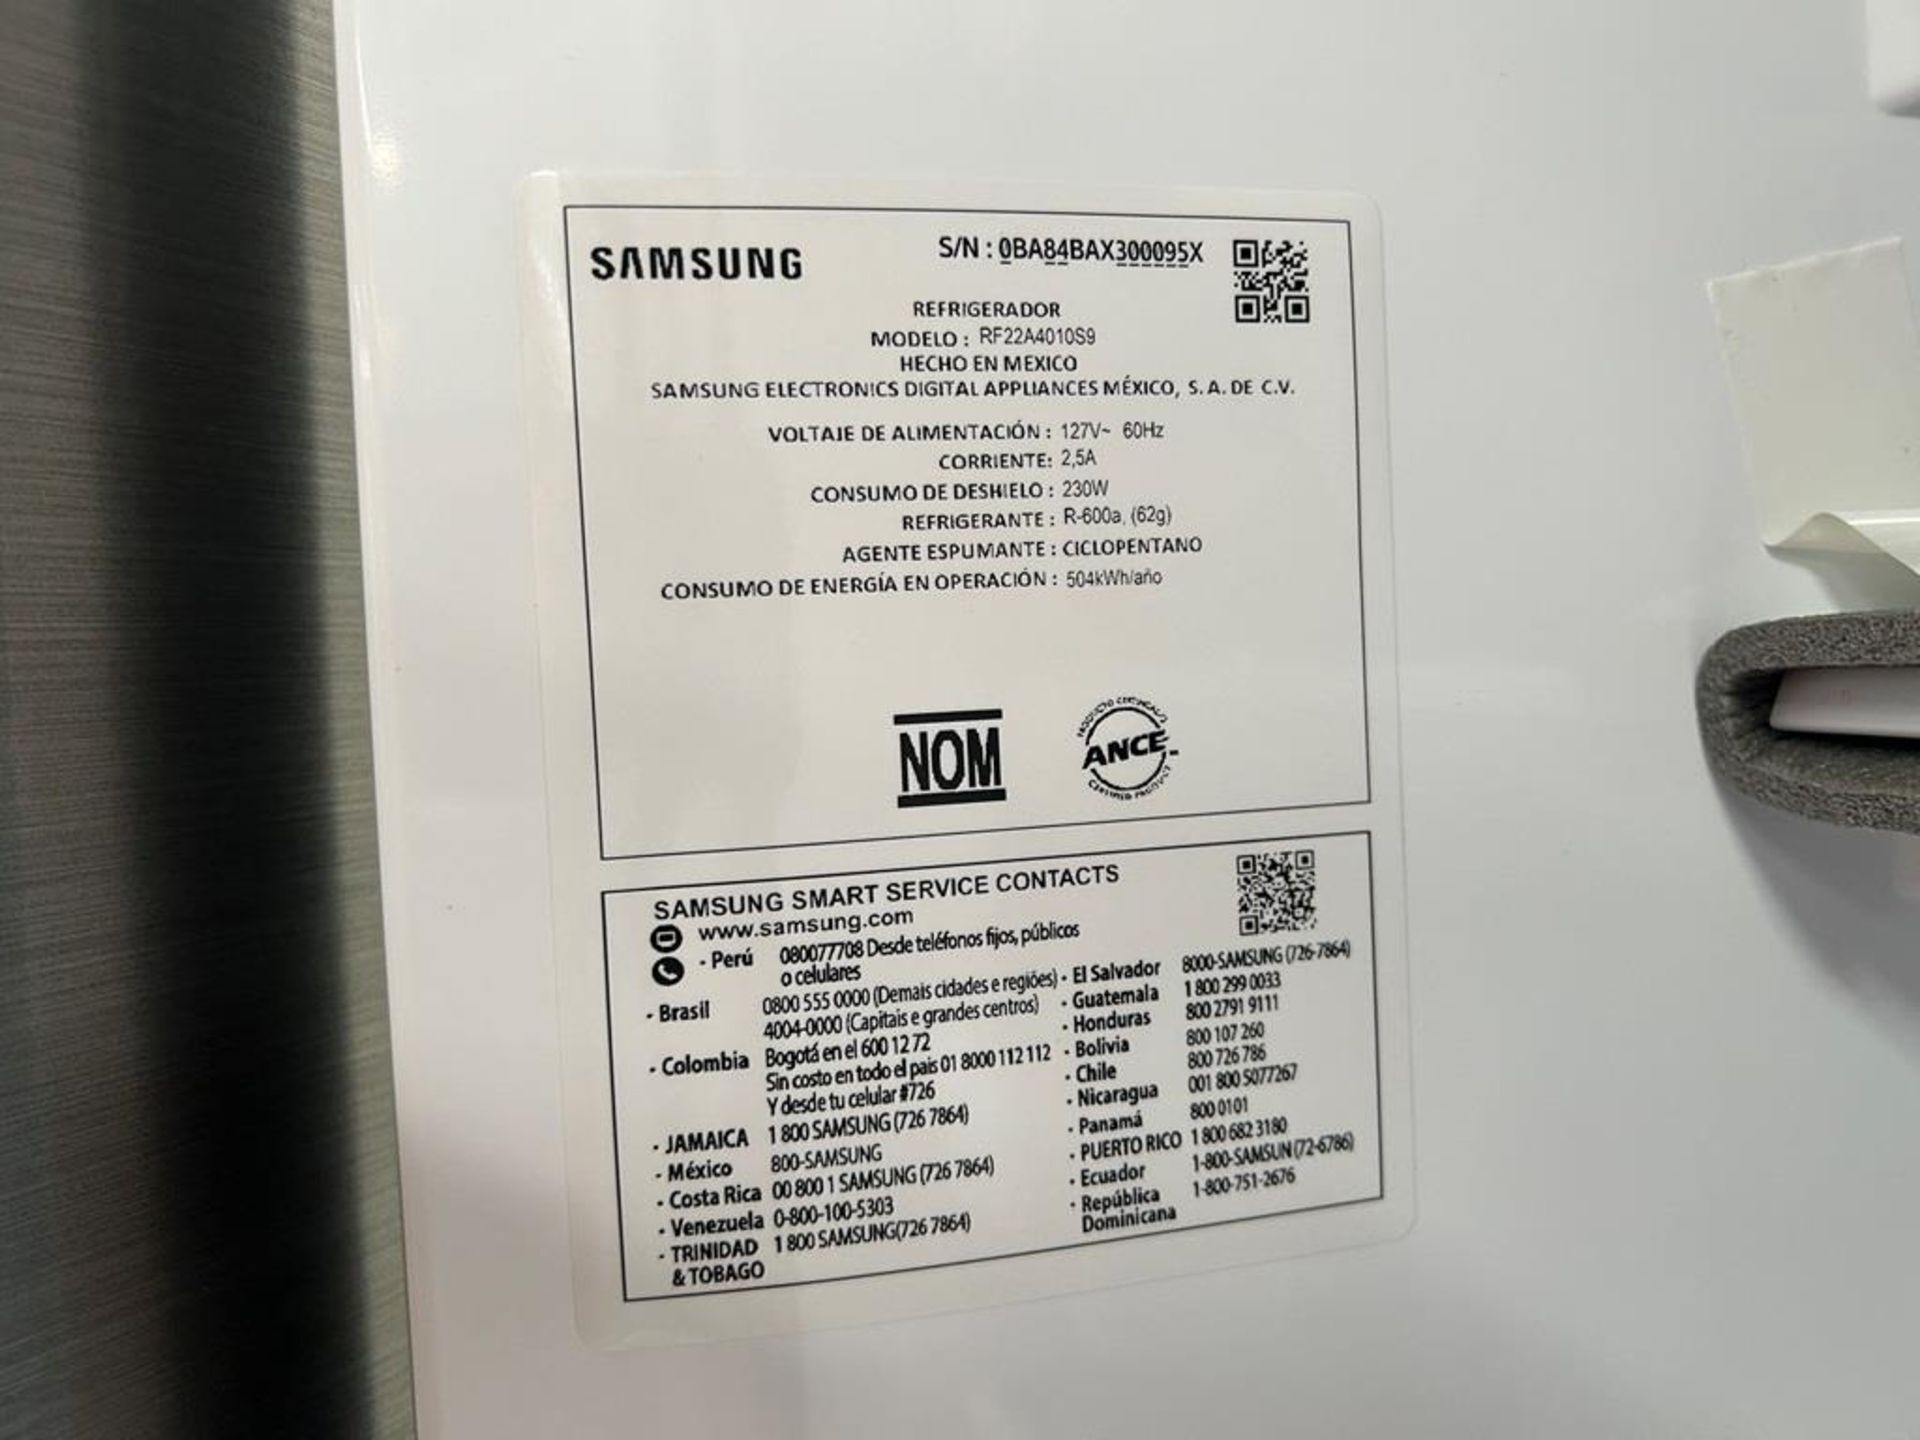 (NUEVO) Refrigerador Marca SAMSUNG, Modelo RF22A4010S9, Serie 0095X, Color GRIS - Image 9 of 11